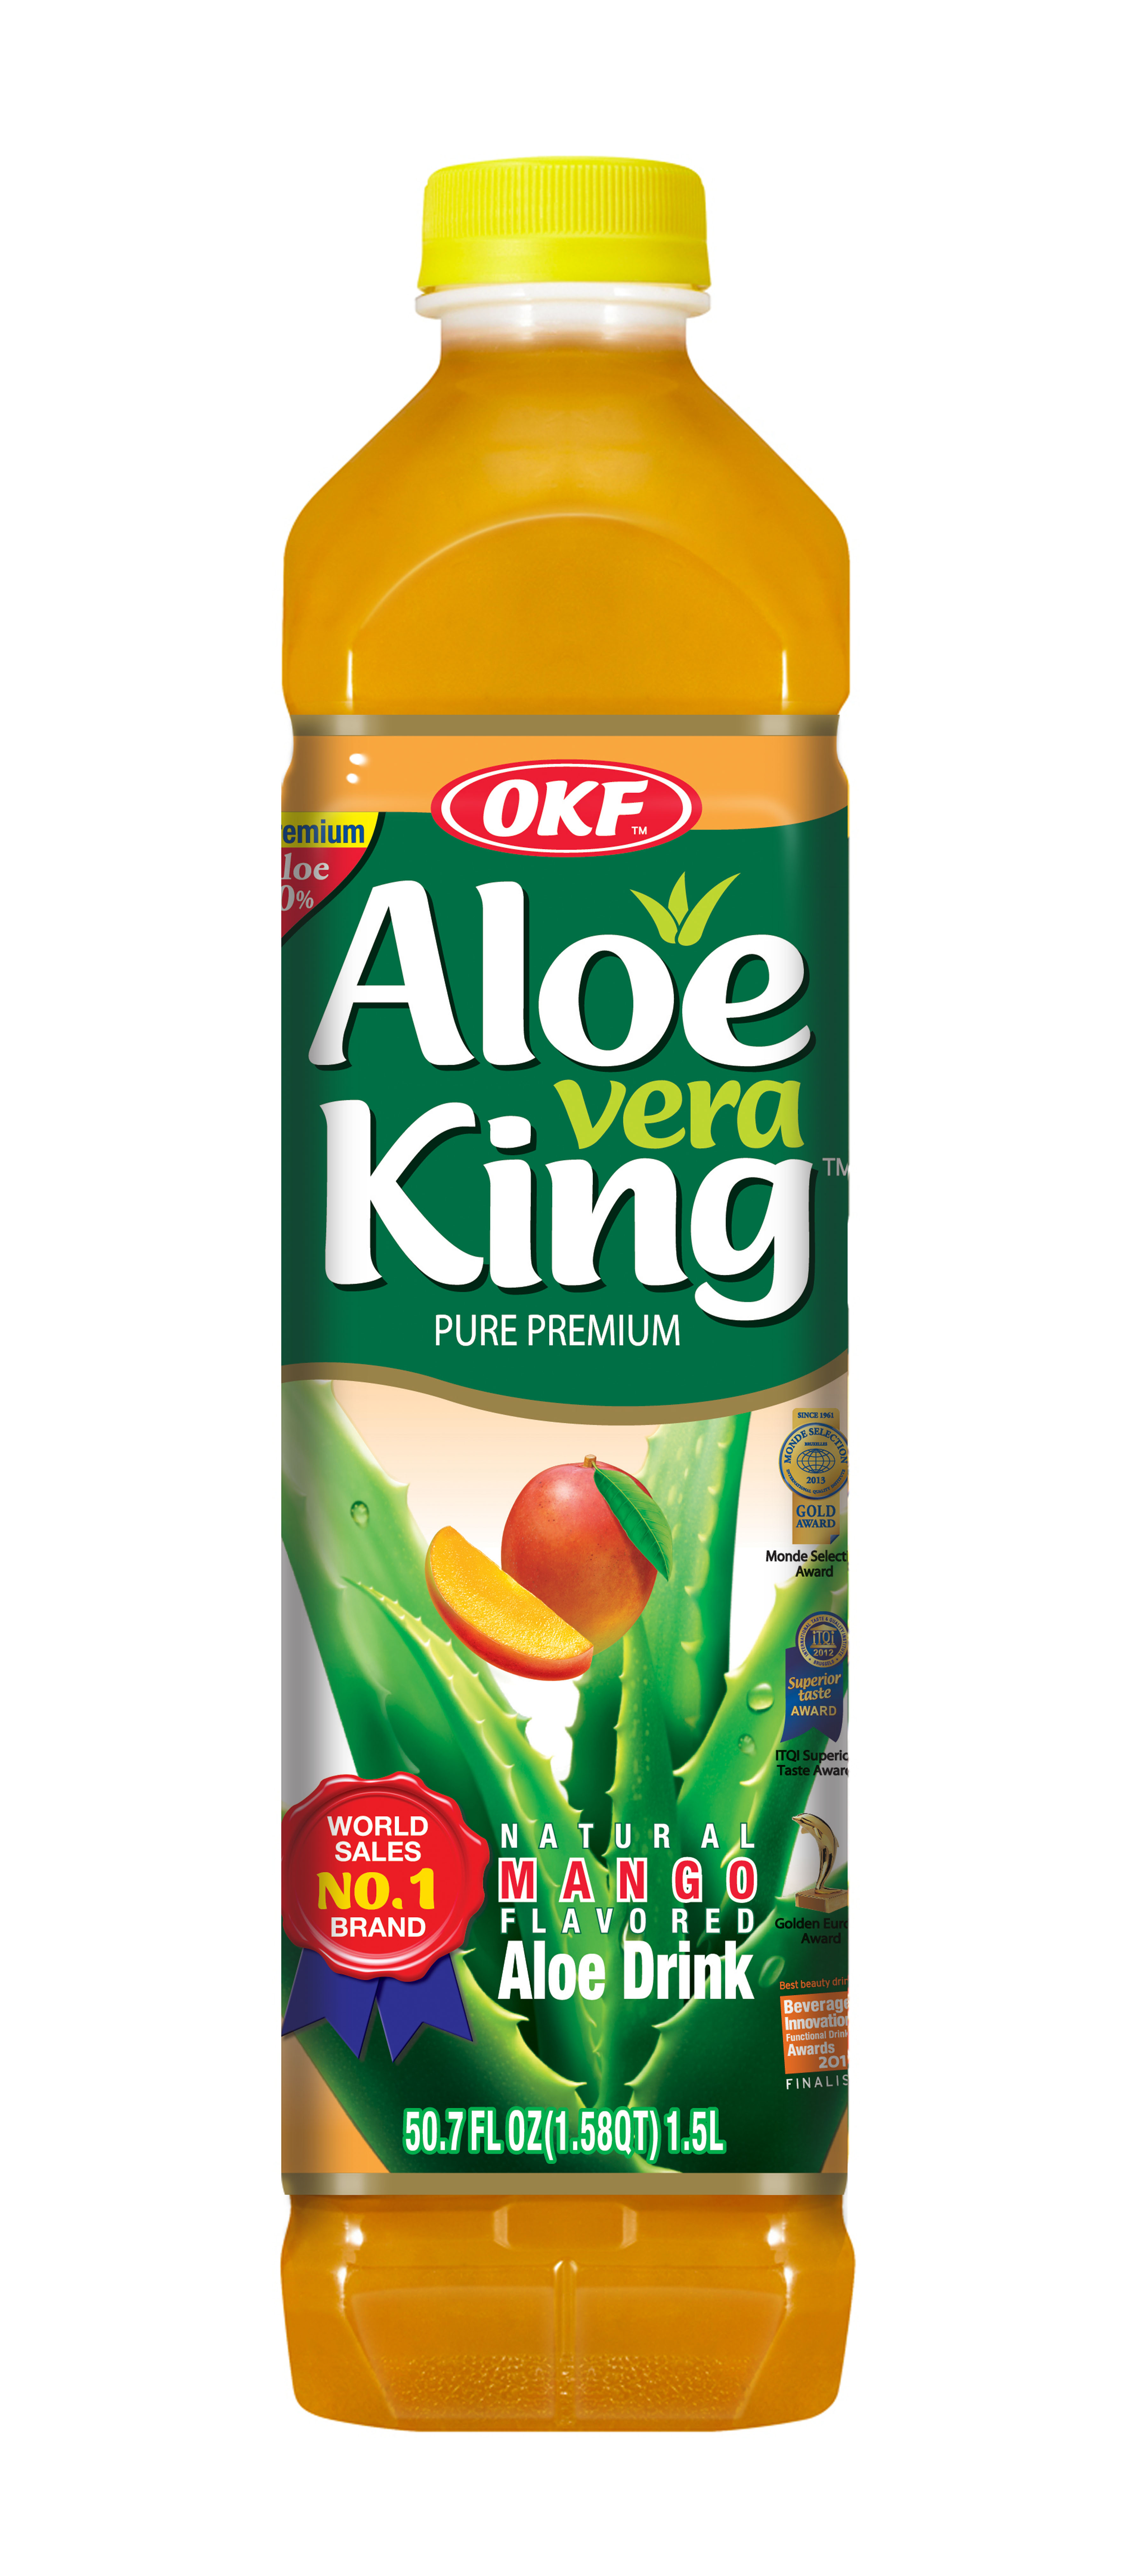 Avk020 Aloe King Mango, 1.5 Liter - Case Of 12